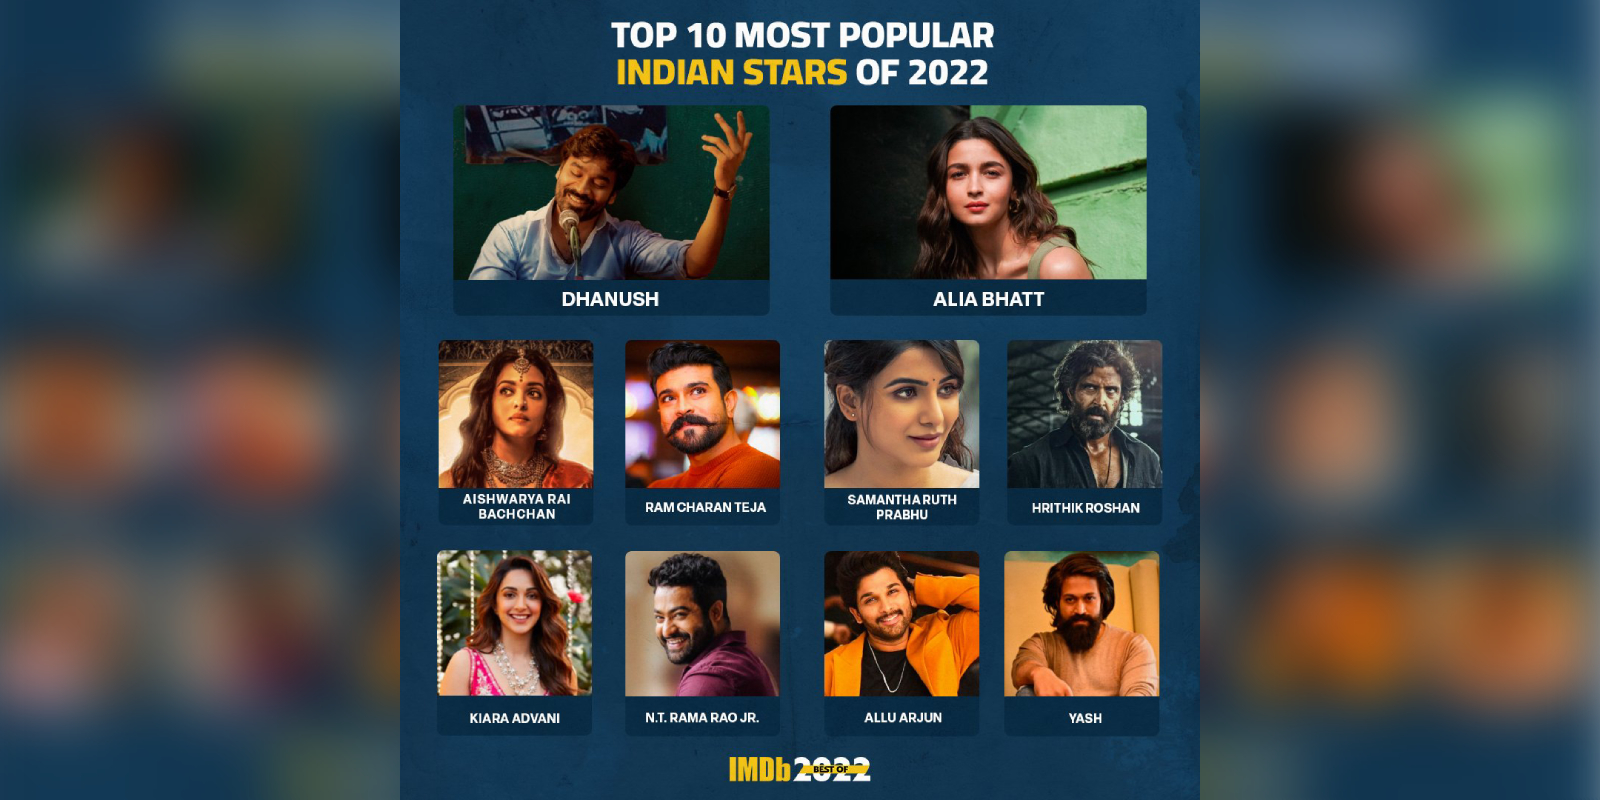 Dhanush Tops IMDB List Of Most Popular Indian Stars, Followed By